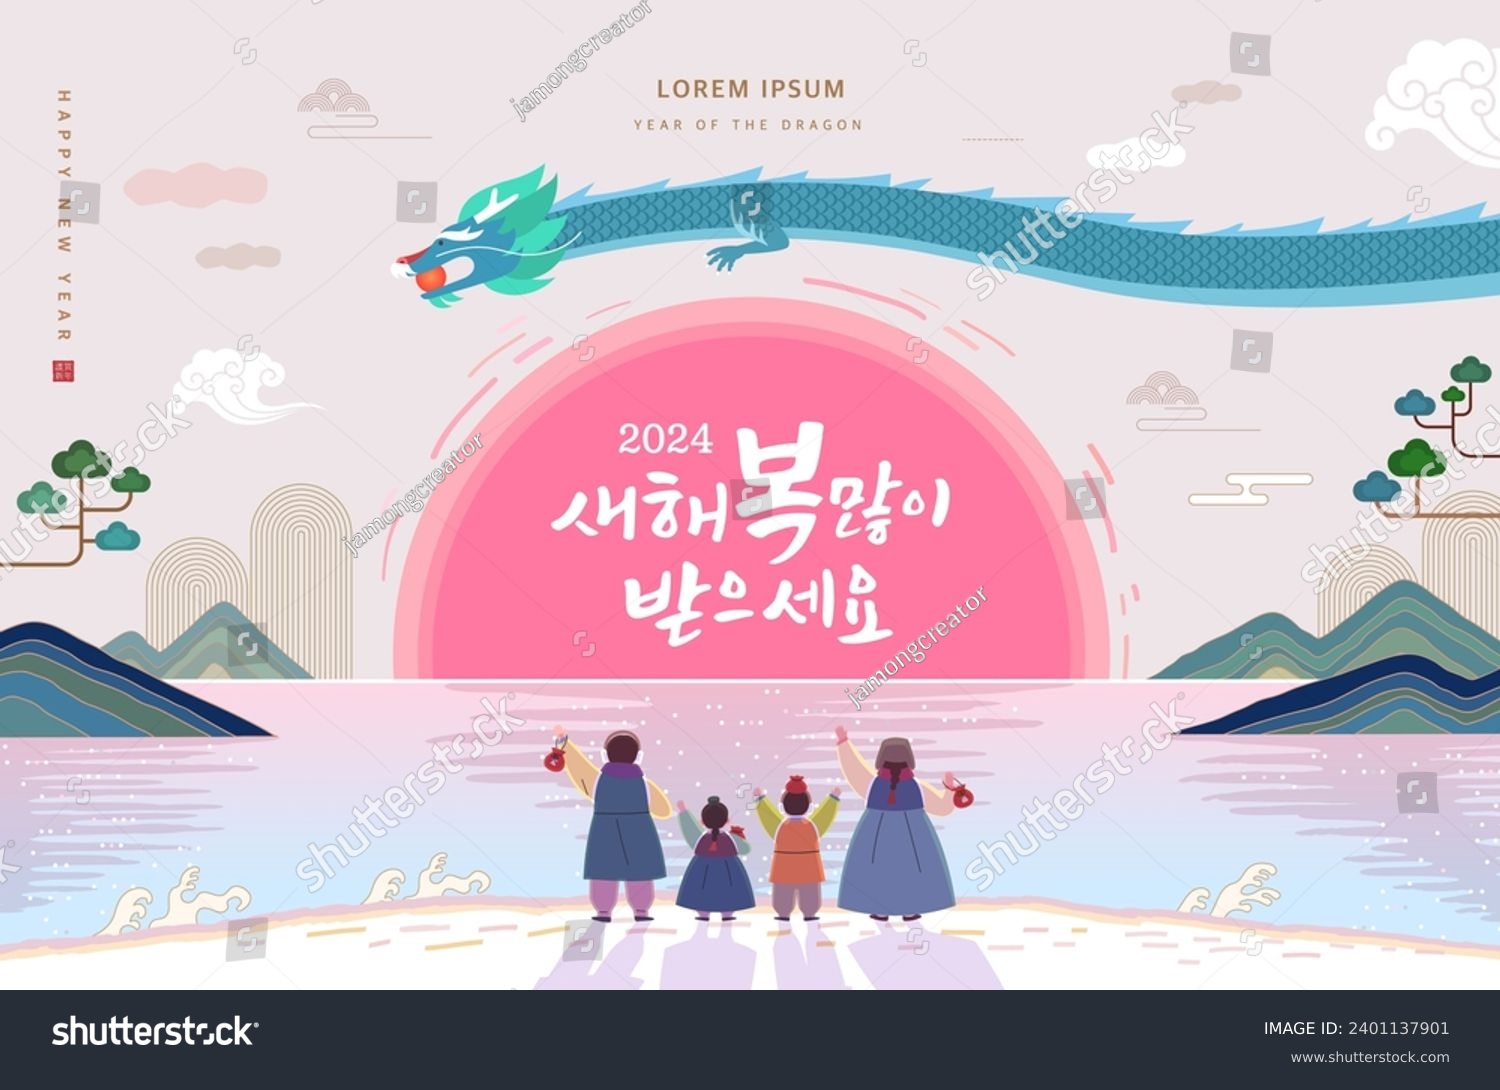 Korea tradition Lunar New Year illustration.Text Translation "happy new year"
 #2401137901